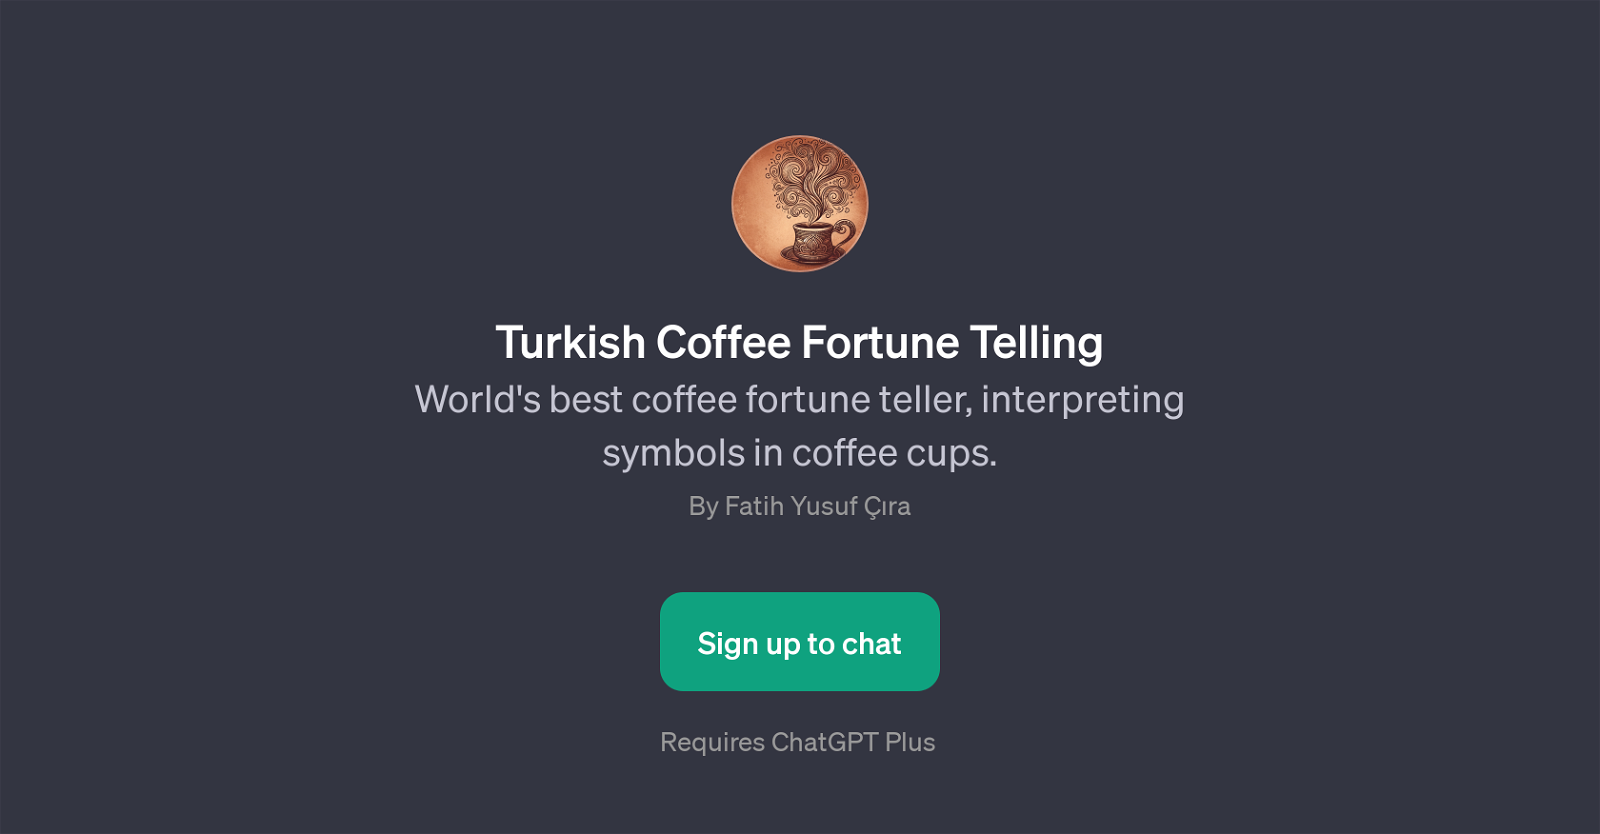 Turkish Coffee Fortune Telling website